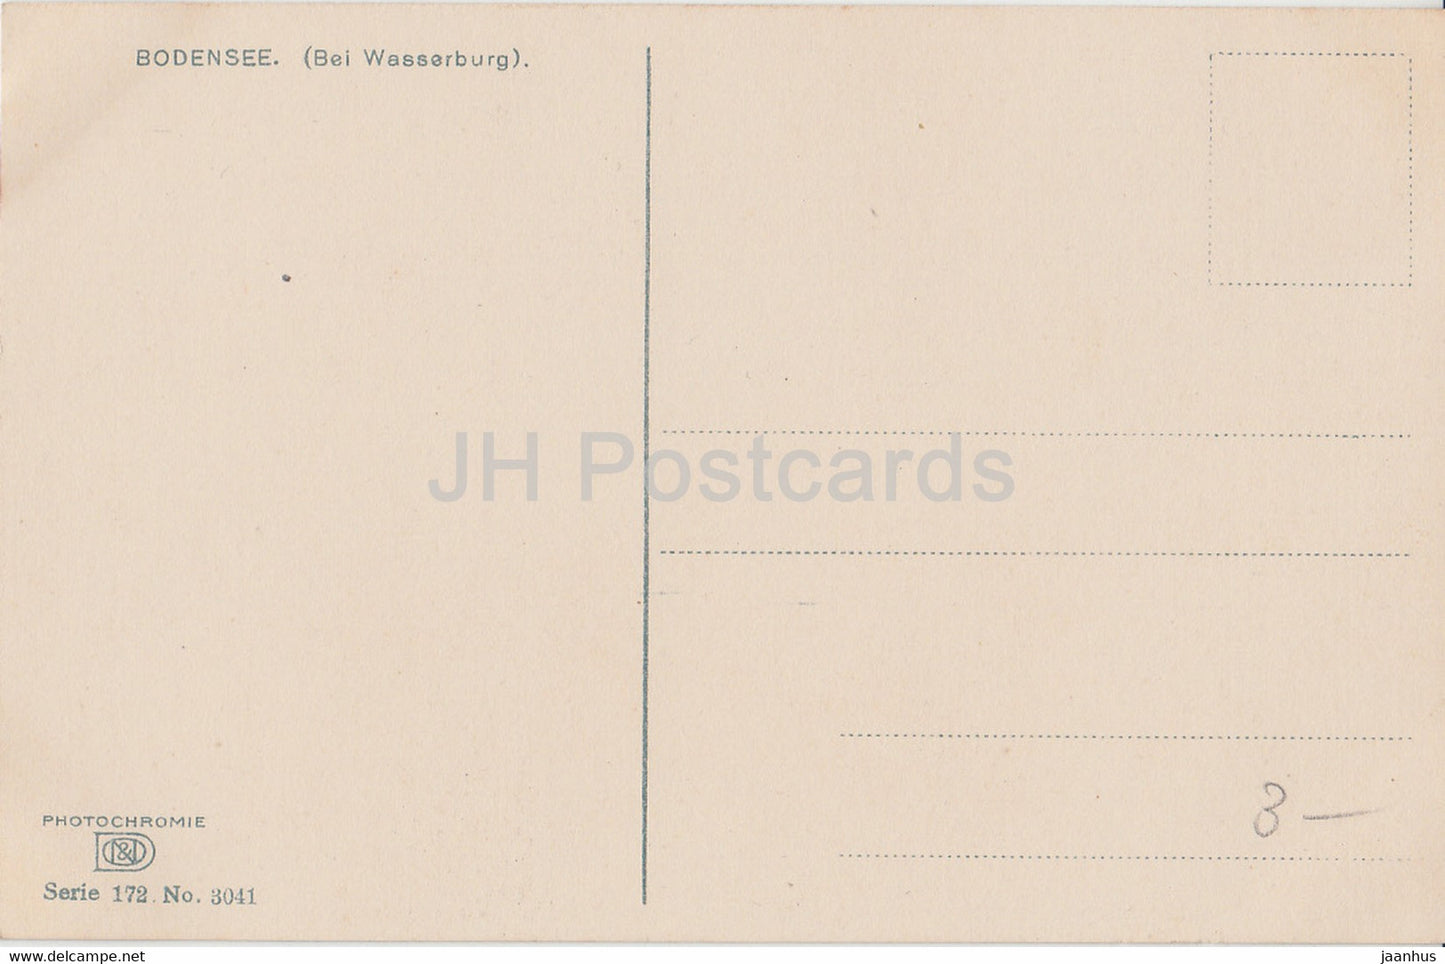 Bodensee bei Wasserburg - boat - Photochromie 3041 - Serie 172 - old postcard -  Germany - unused